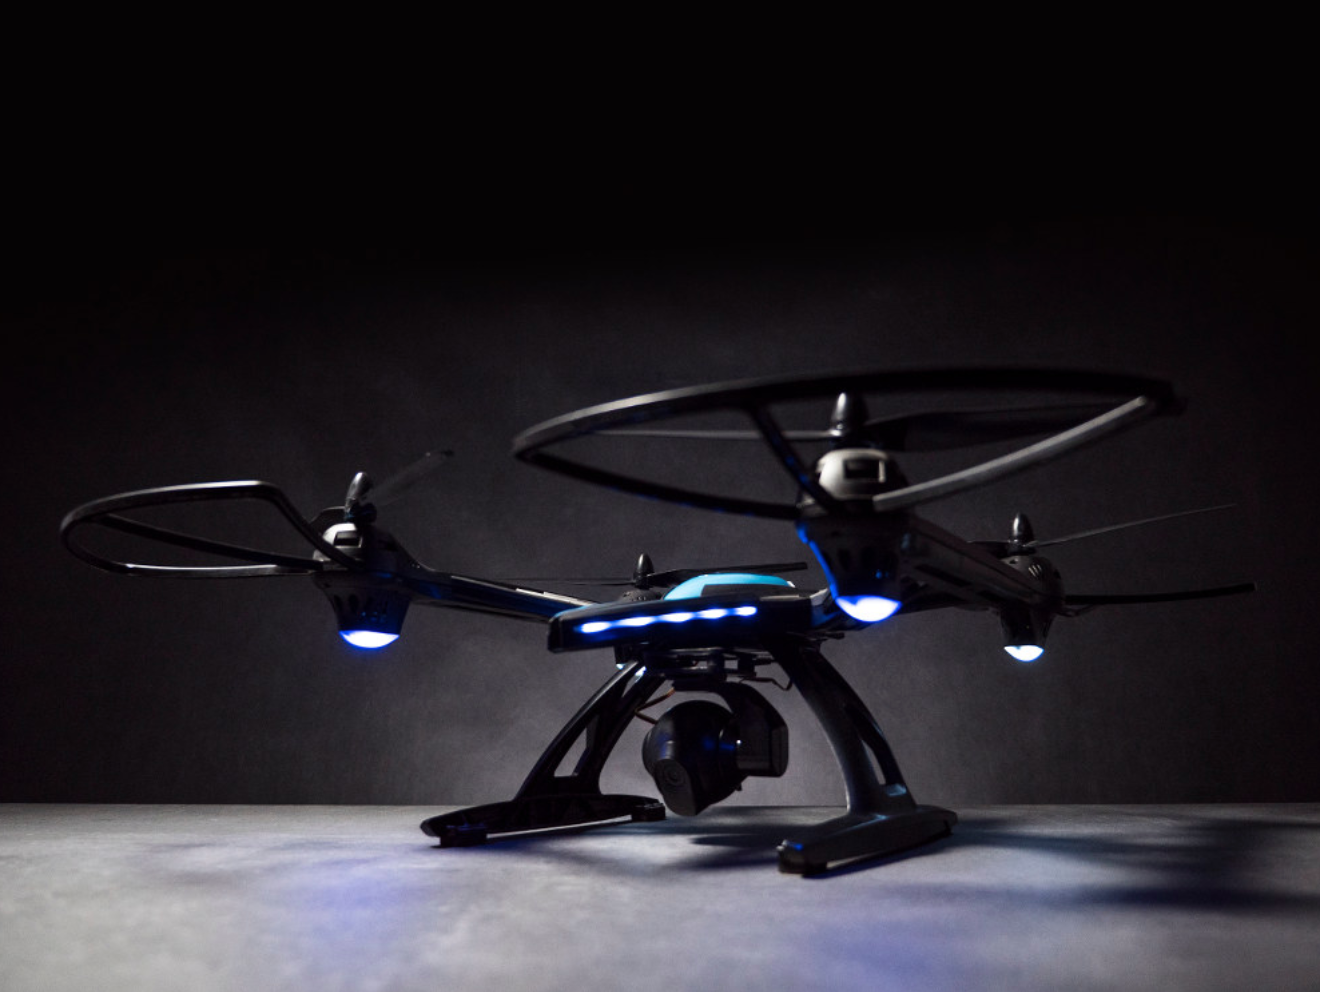 X-bee drone 7.2 FPV
